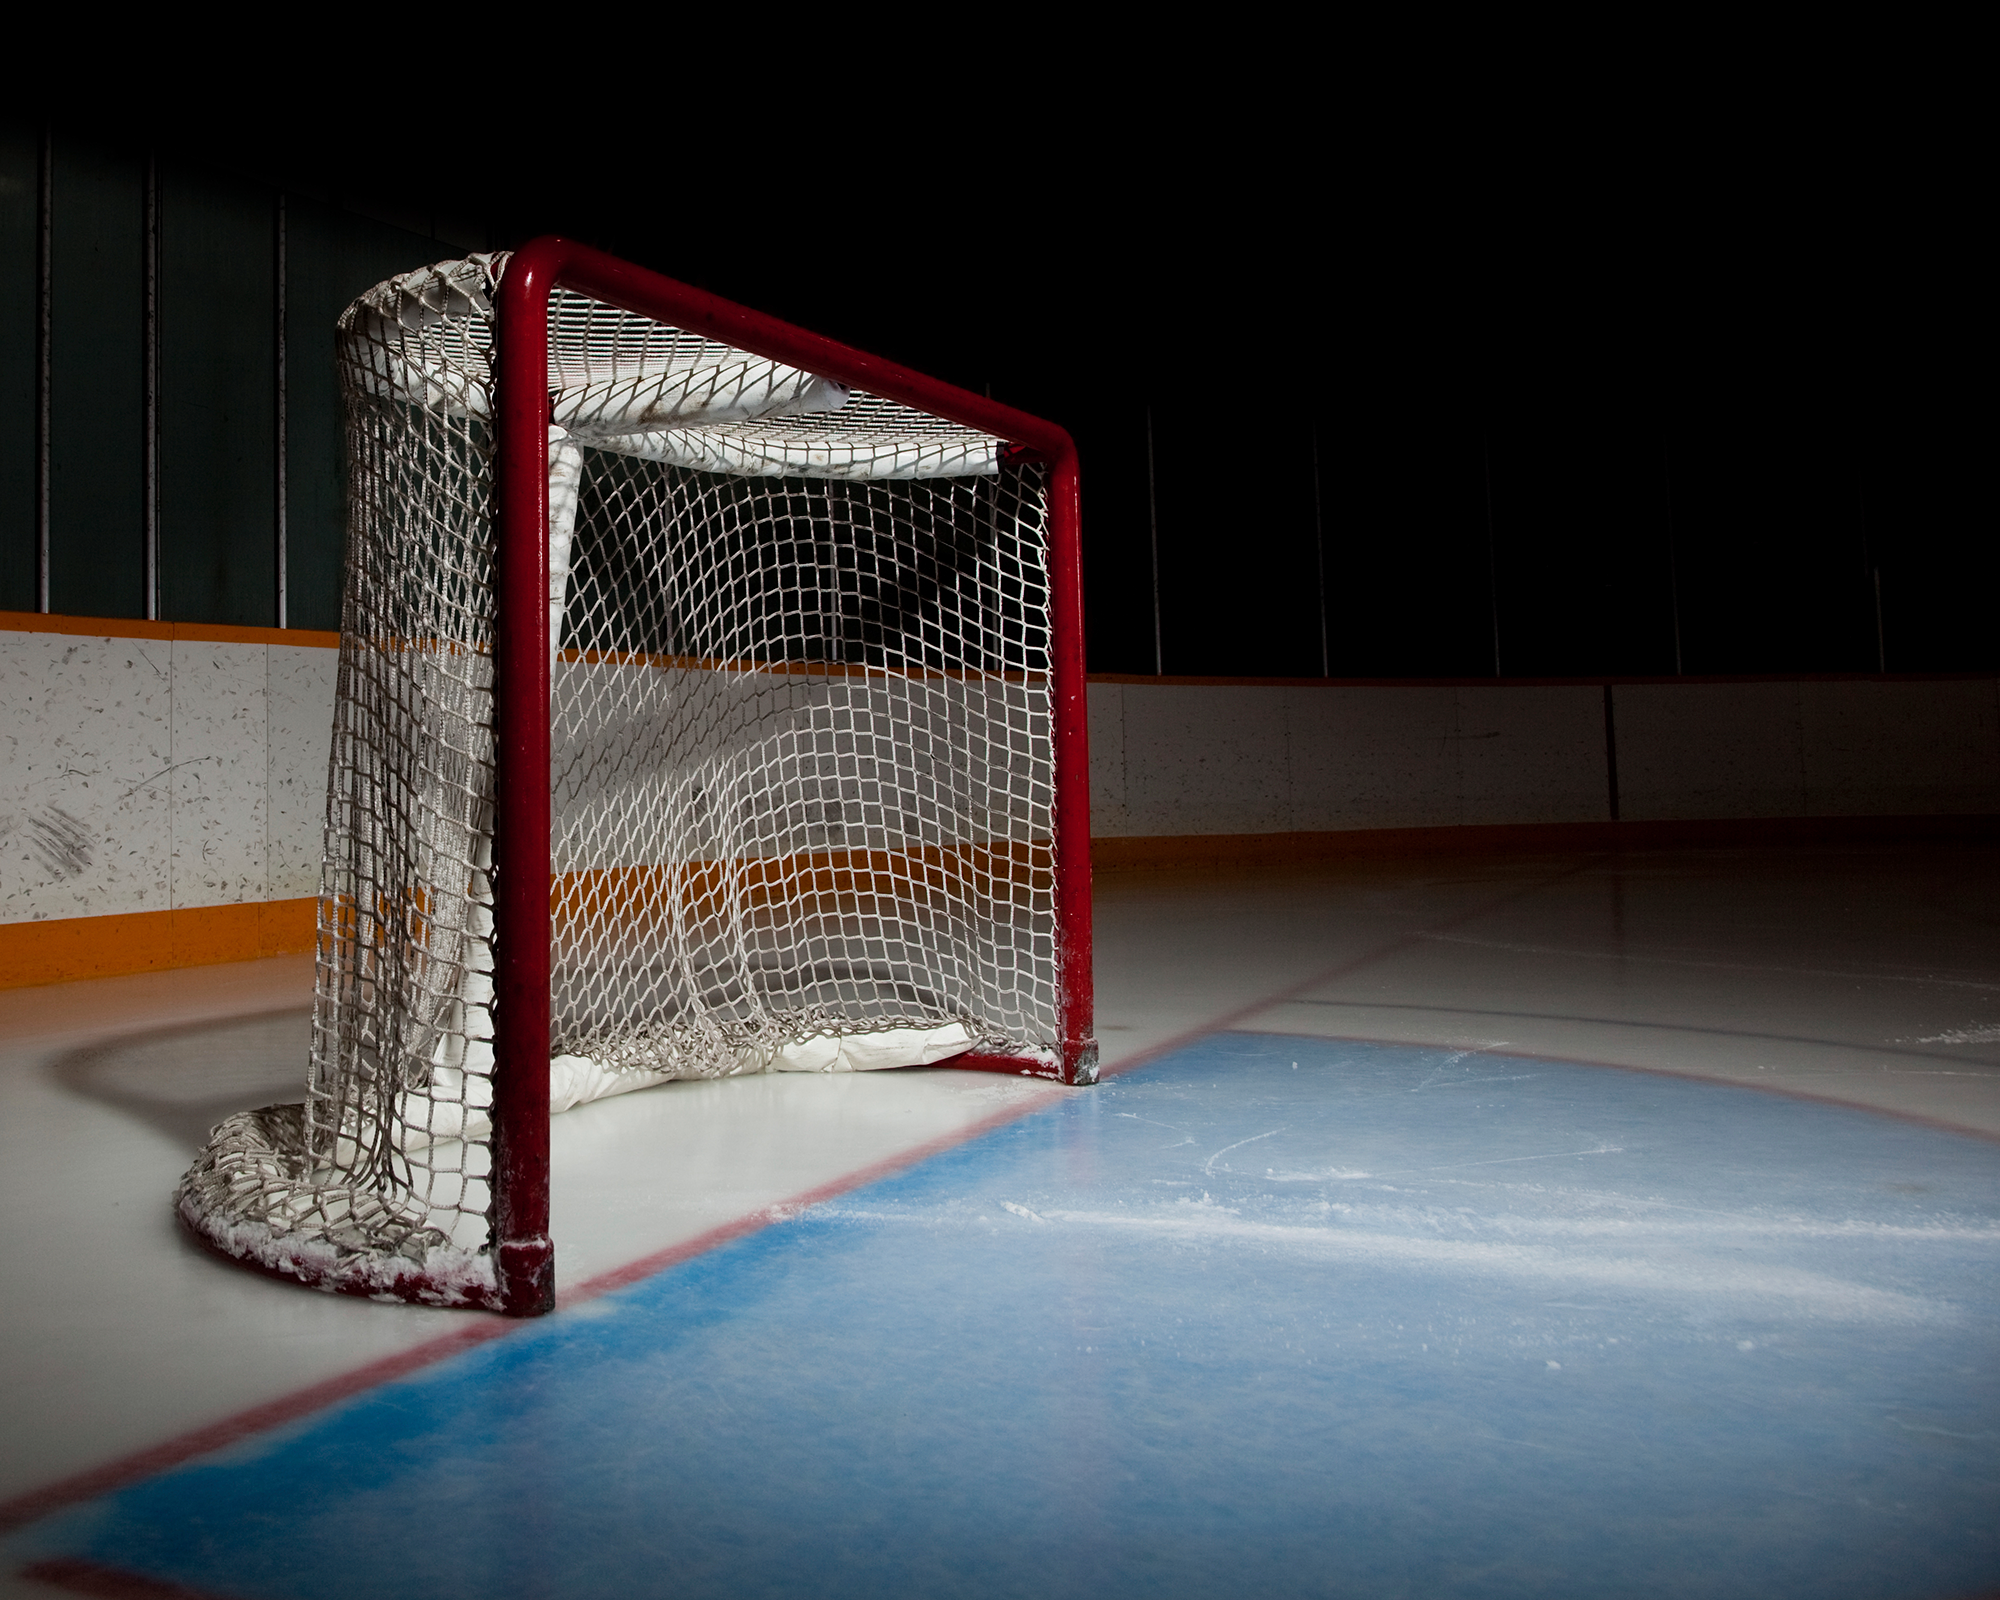 Hockey net without a goalie